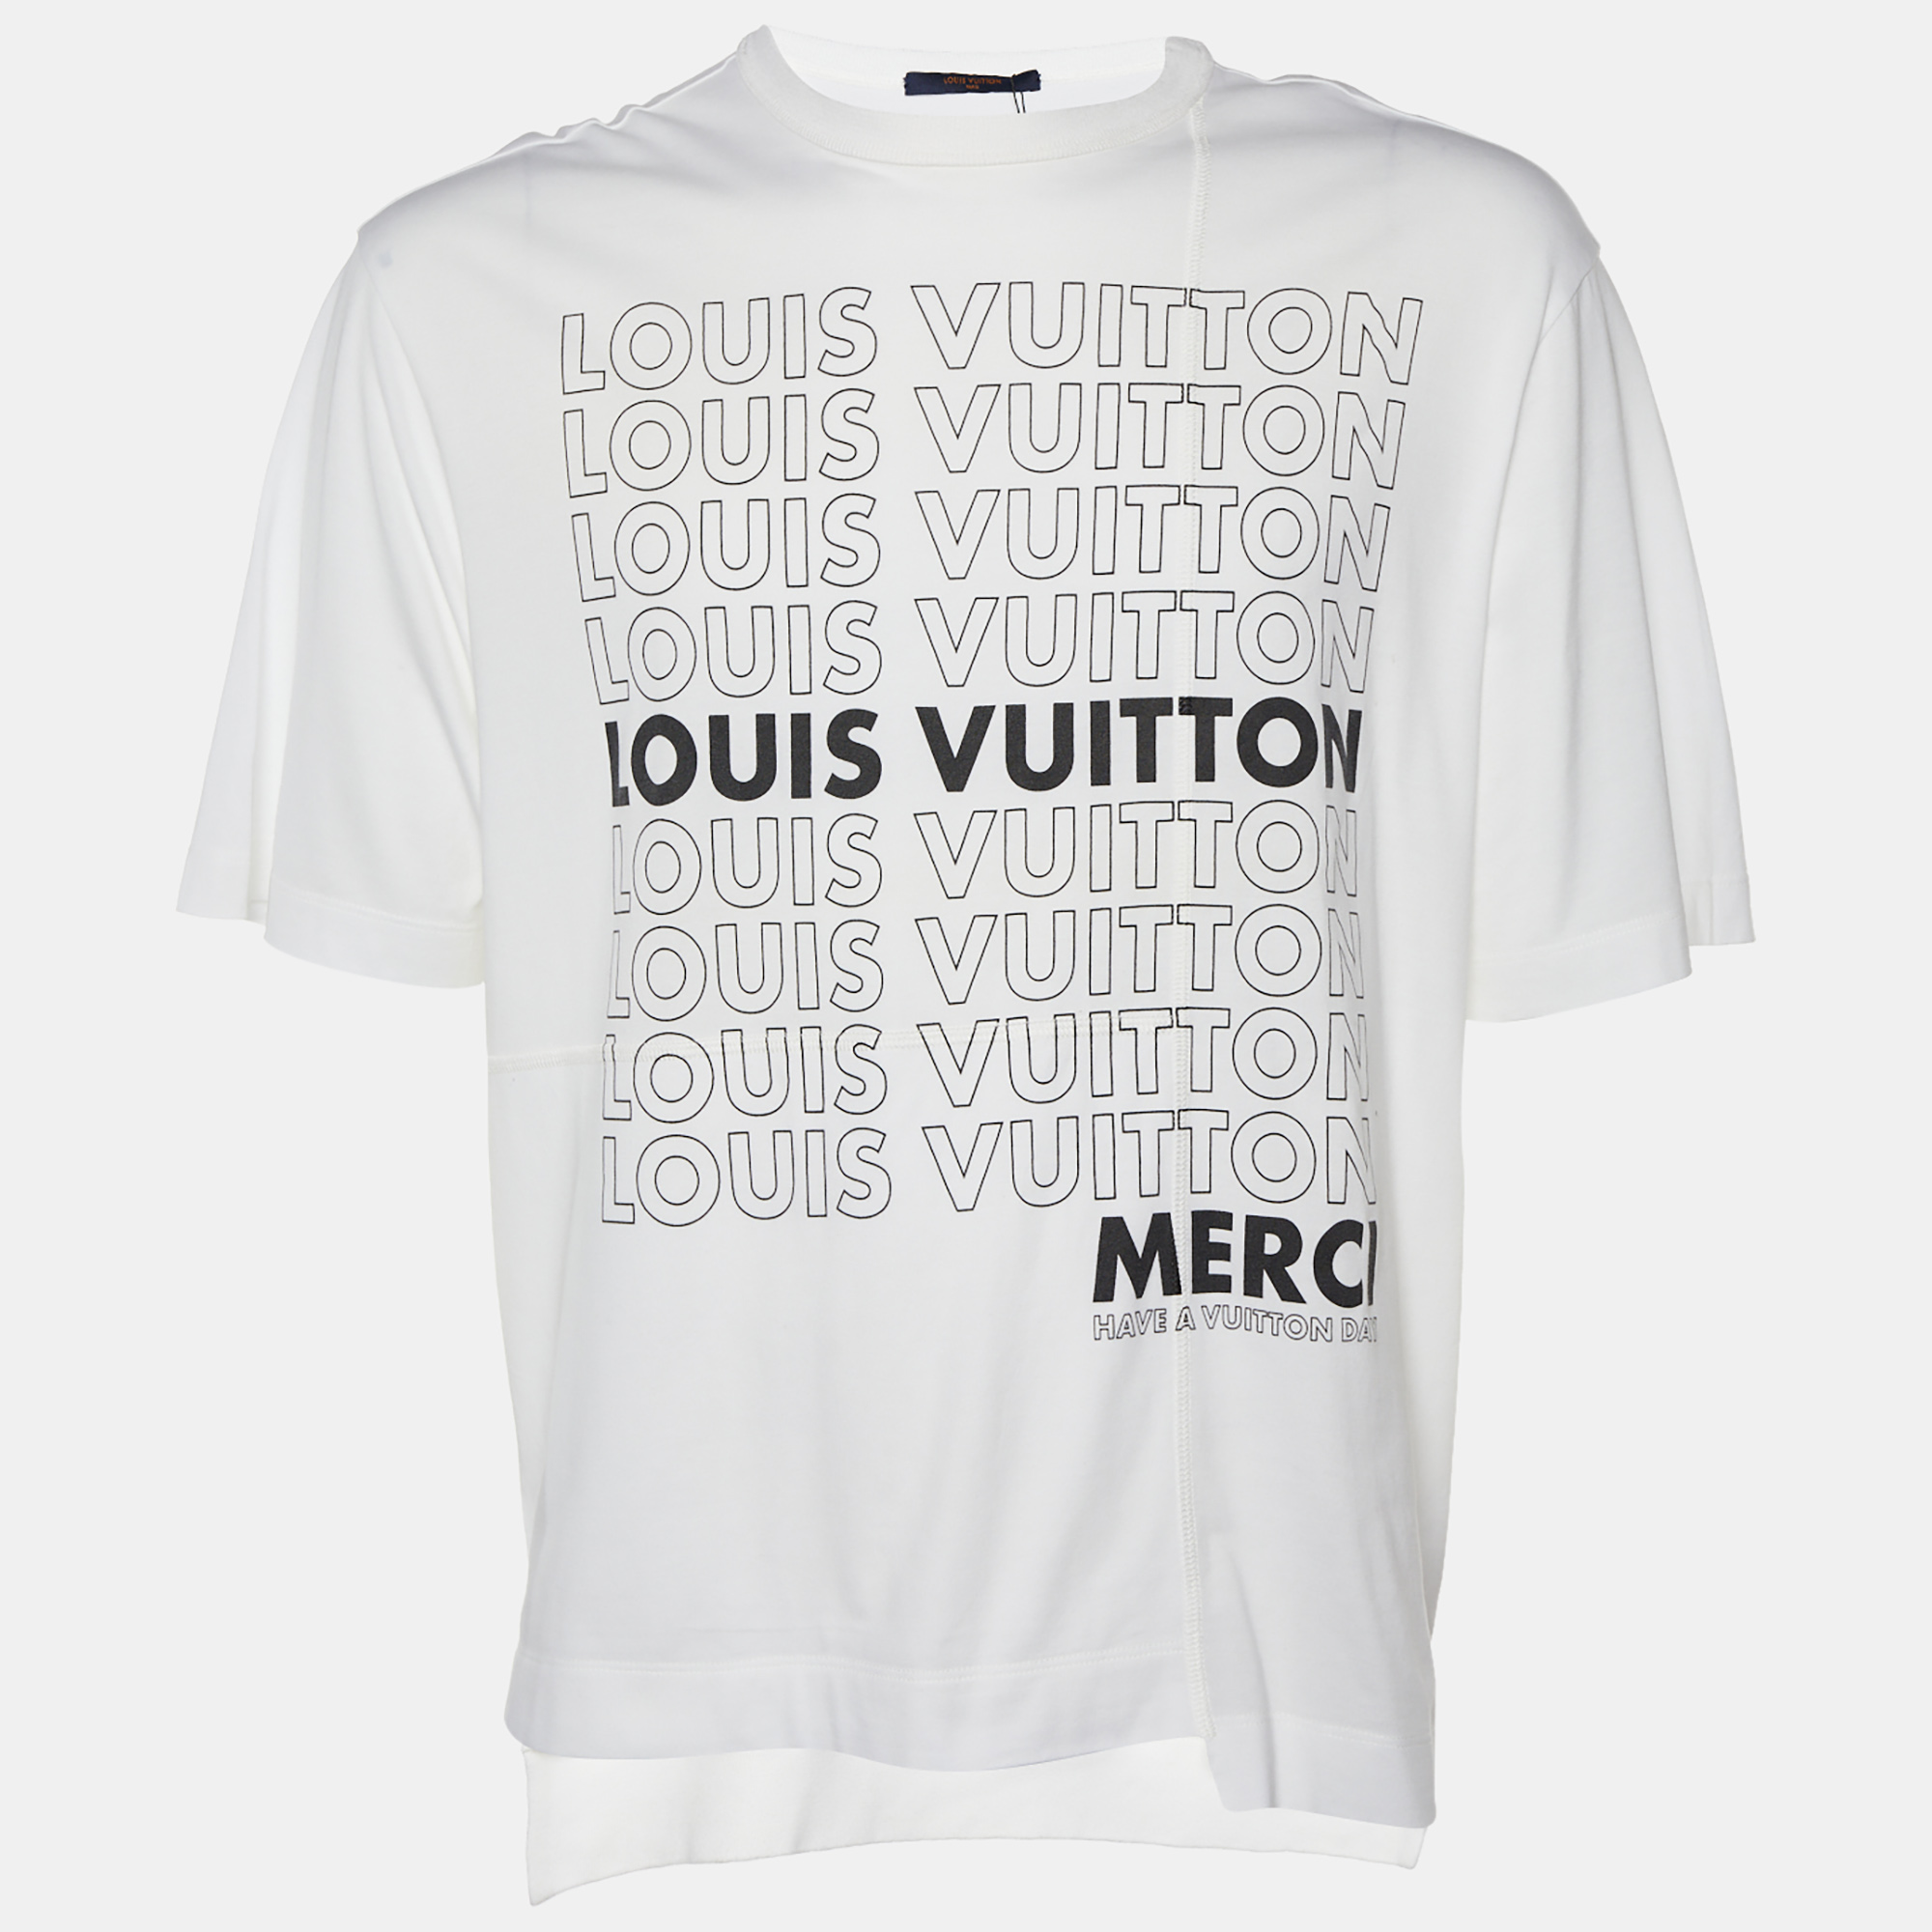 LOUIS VUITTON LOUIS VUITTON Short sleeve T-shirt cotton White logo Used  mens LV size S